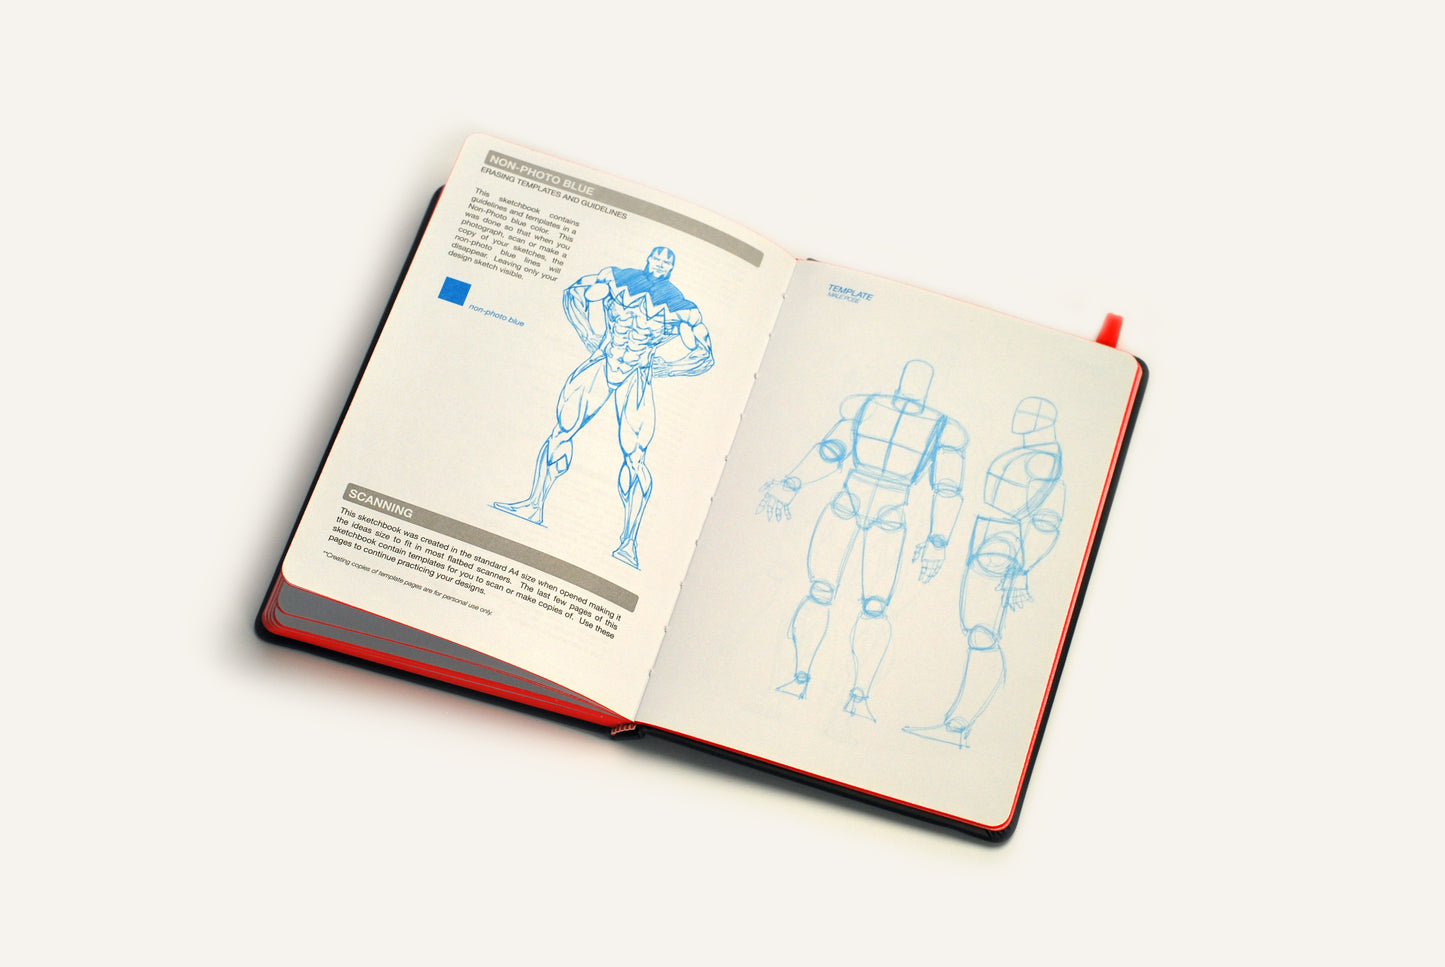 How to Draw SUPER HEROS Sketchbook